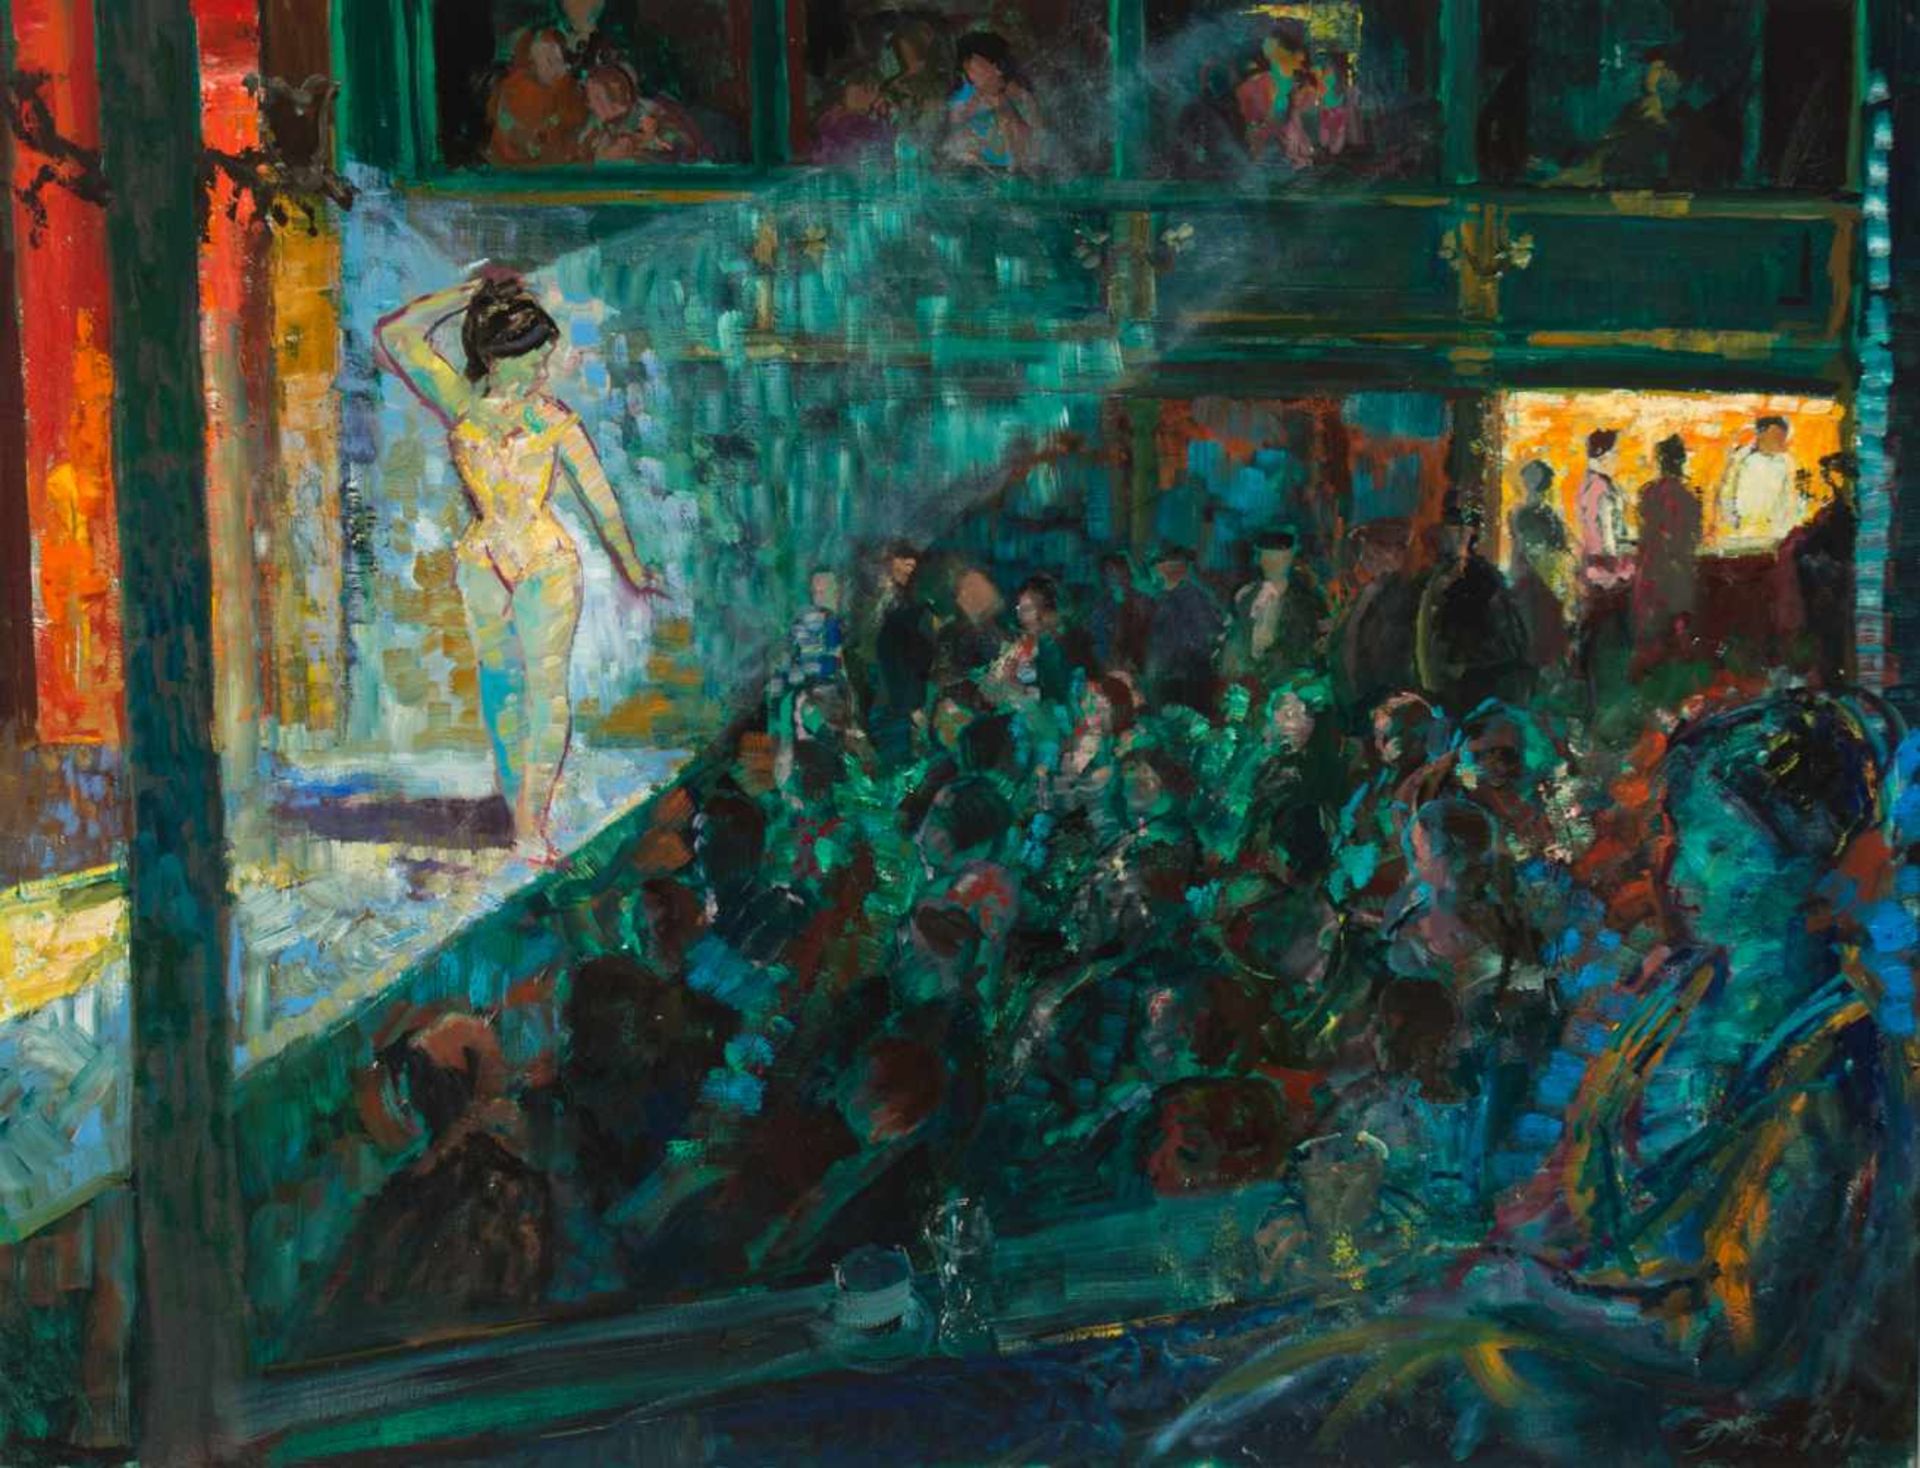 Emili Grau Sala (Barcelona, 1911 - 1975)"Music Hall a Barcelona"Oil on canvas. Signed. On the back